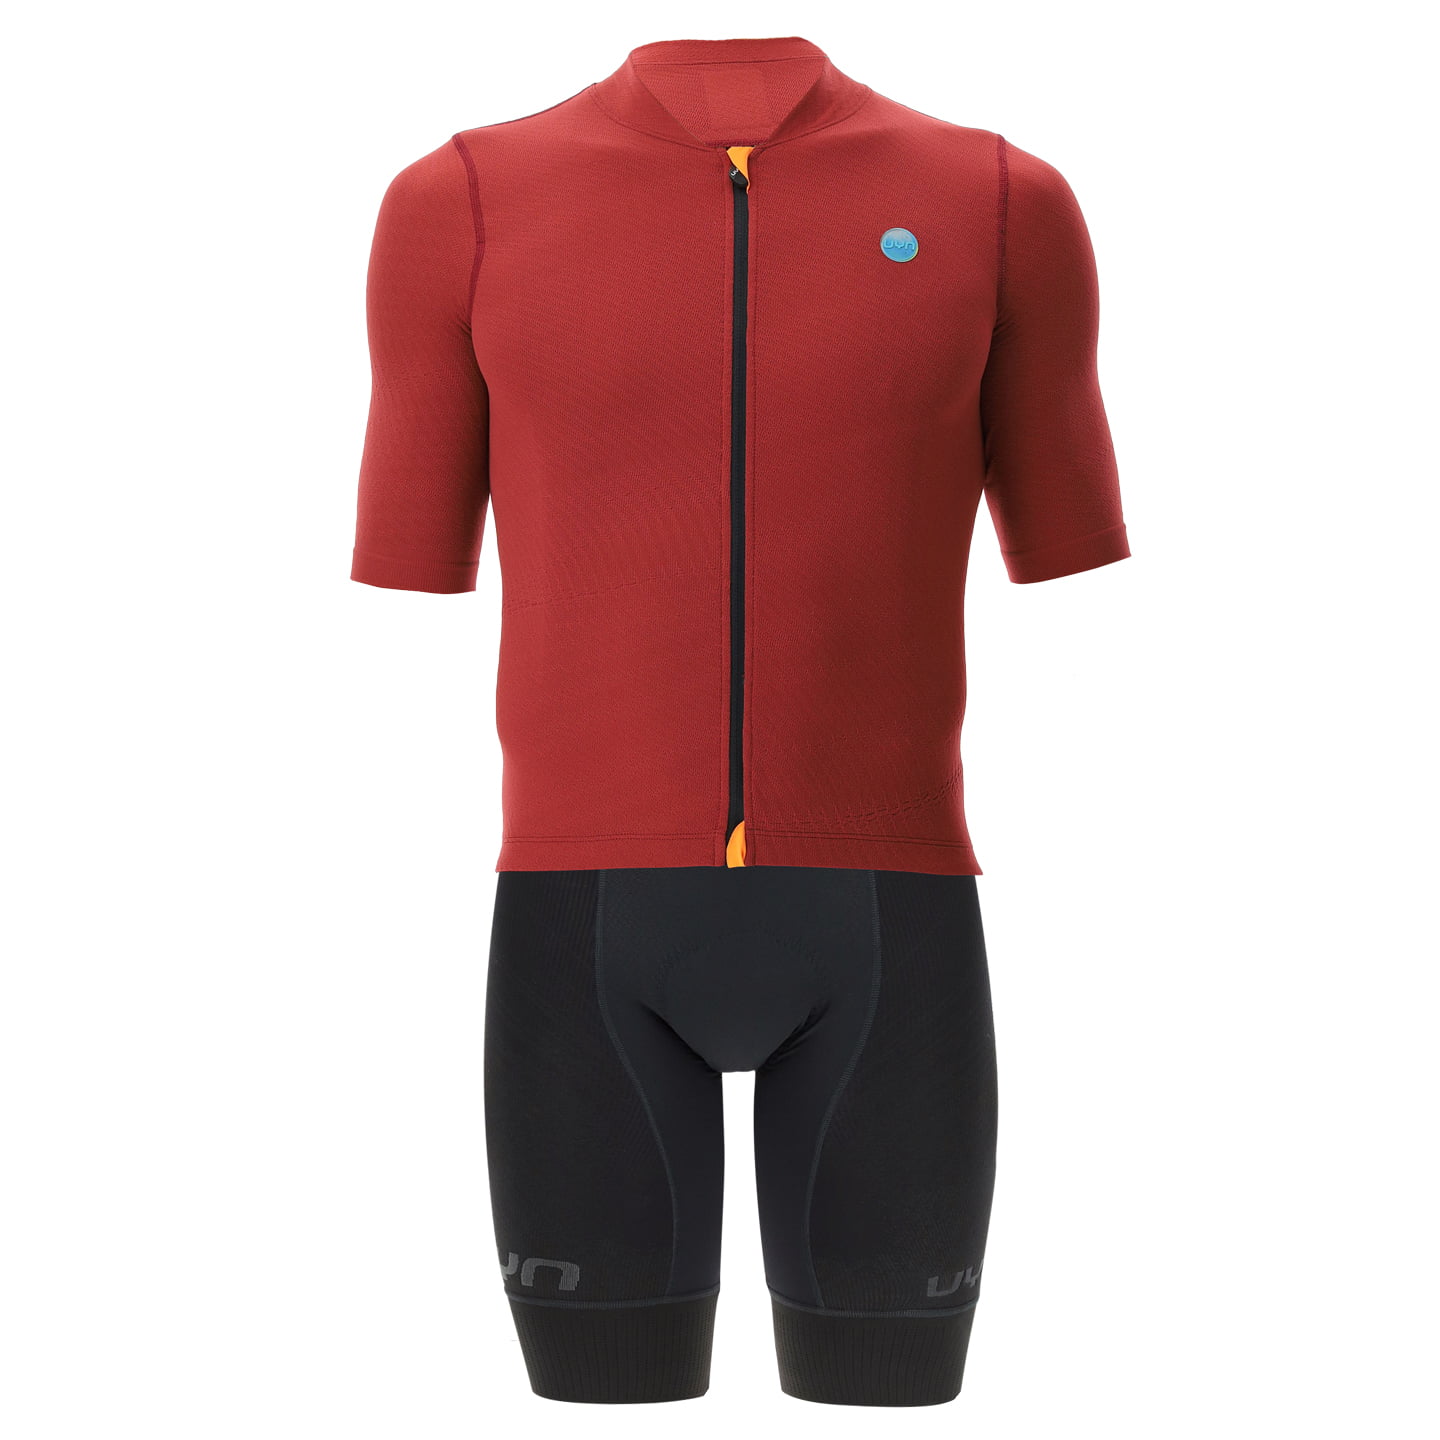 UYN Lightspeed Set (cycling jersey + cycling shorts), for men